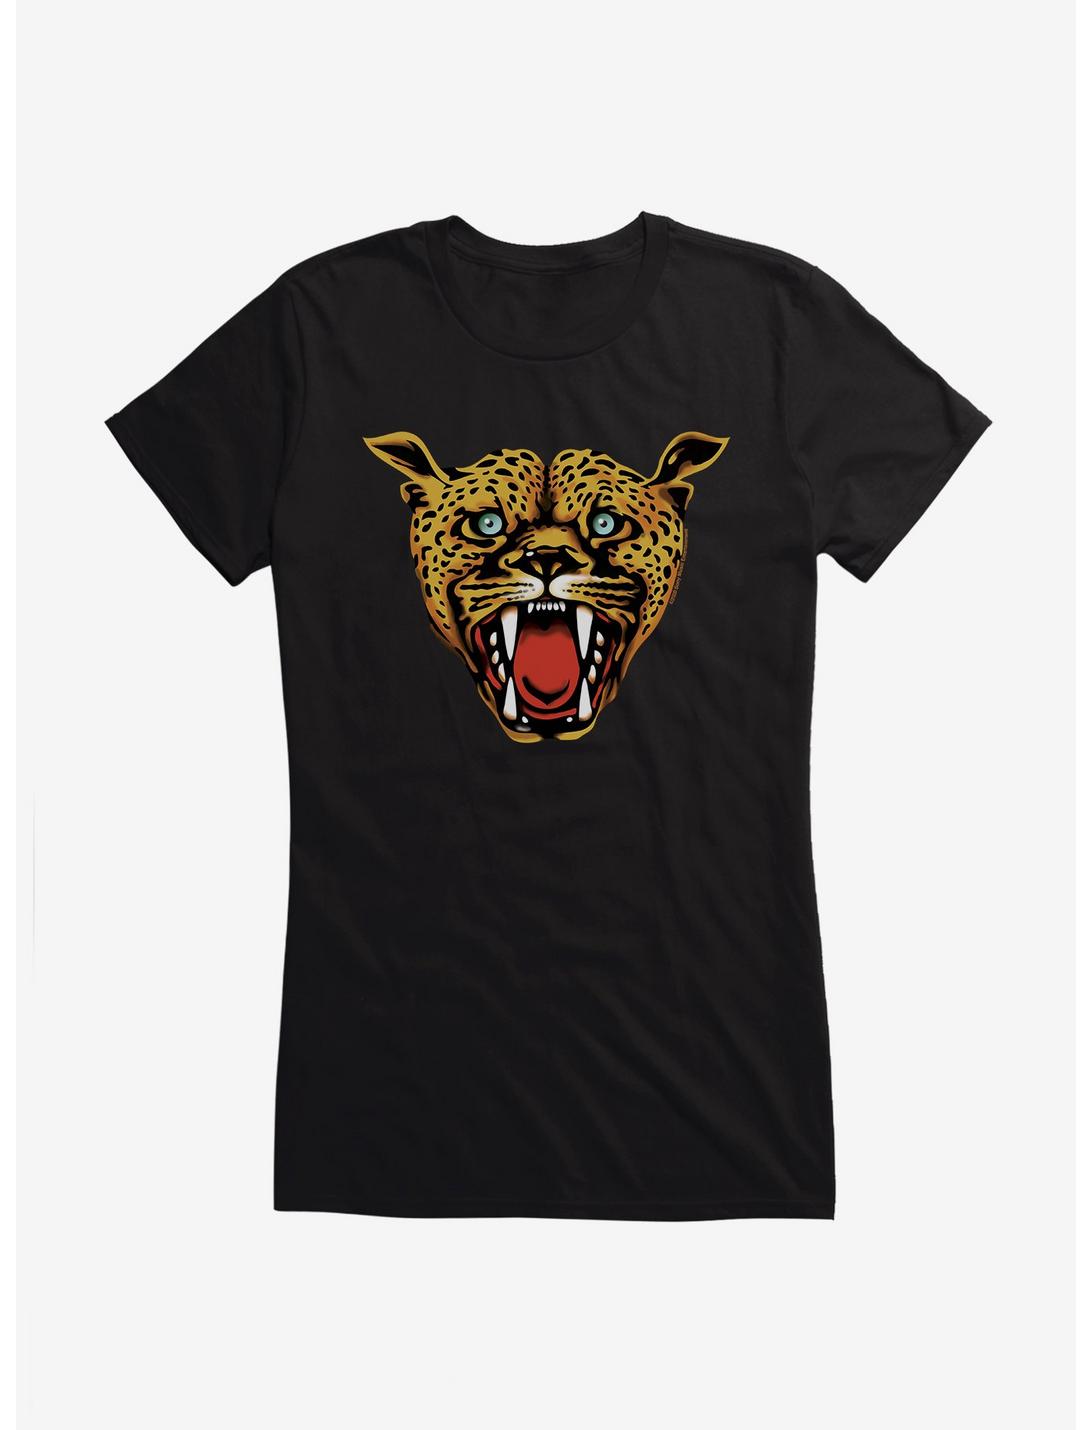 Iggy Pop Cheetah Face Girls T-Shirt, , hi-res